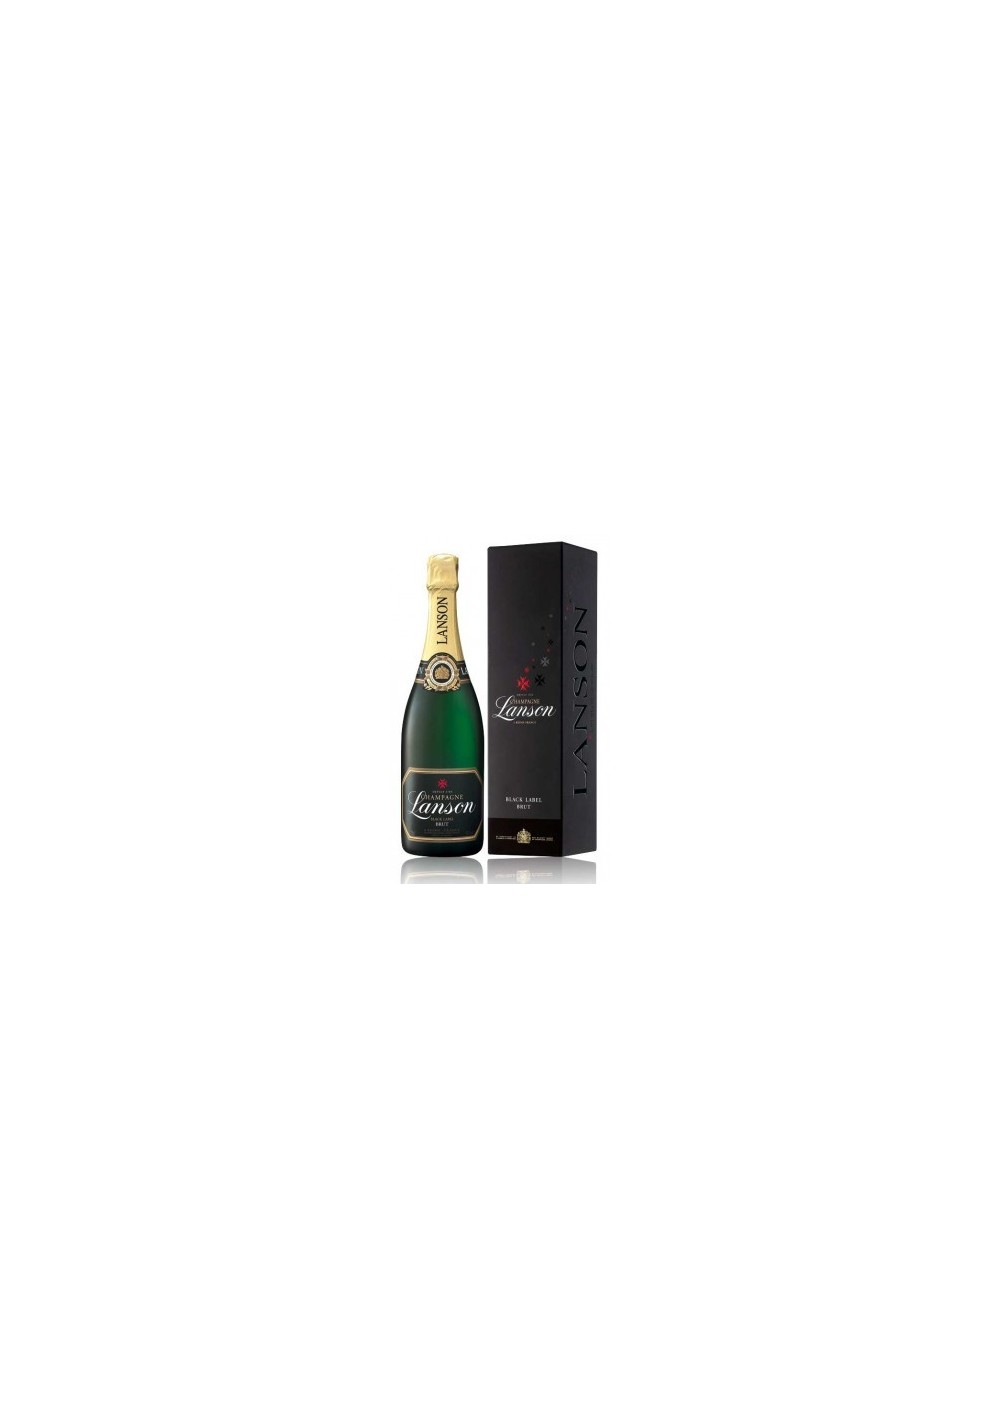 Champagne Lanson Brut (37.5cl)